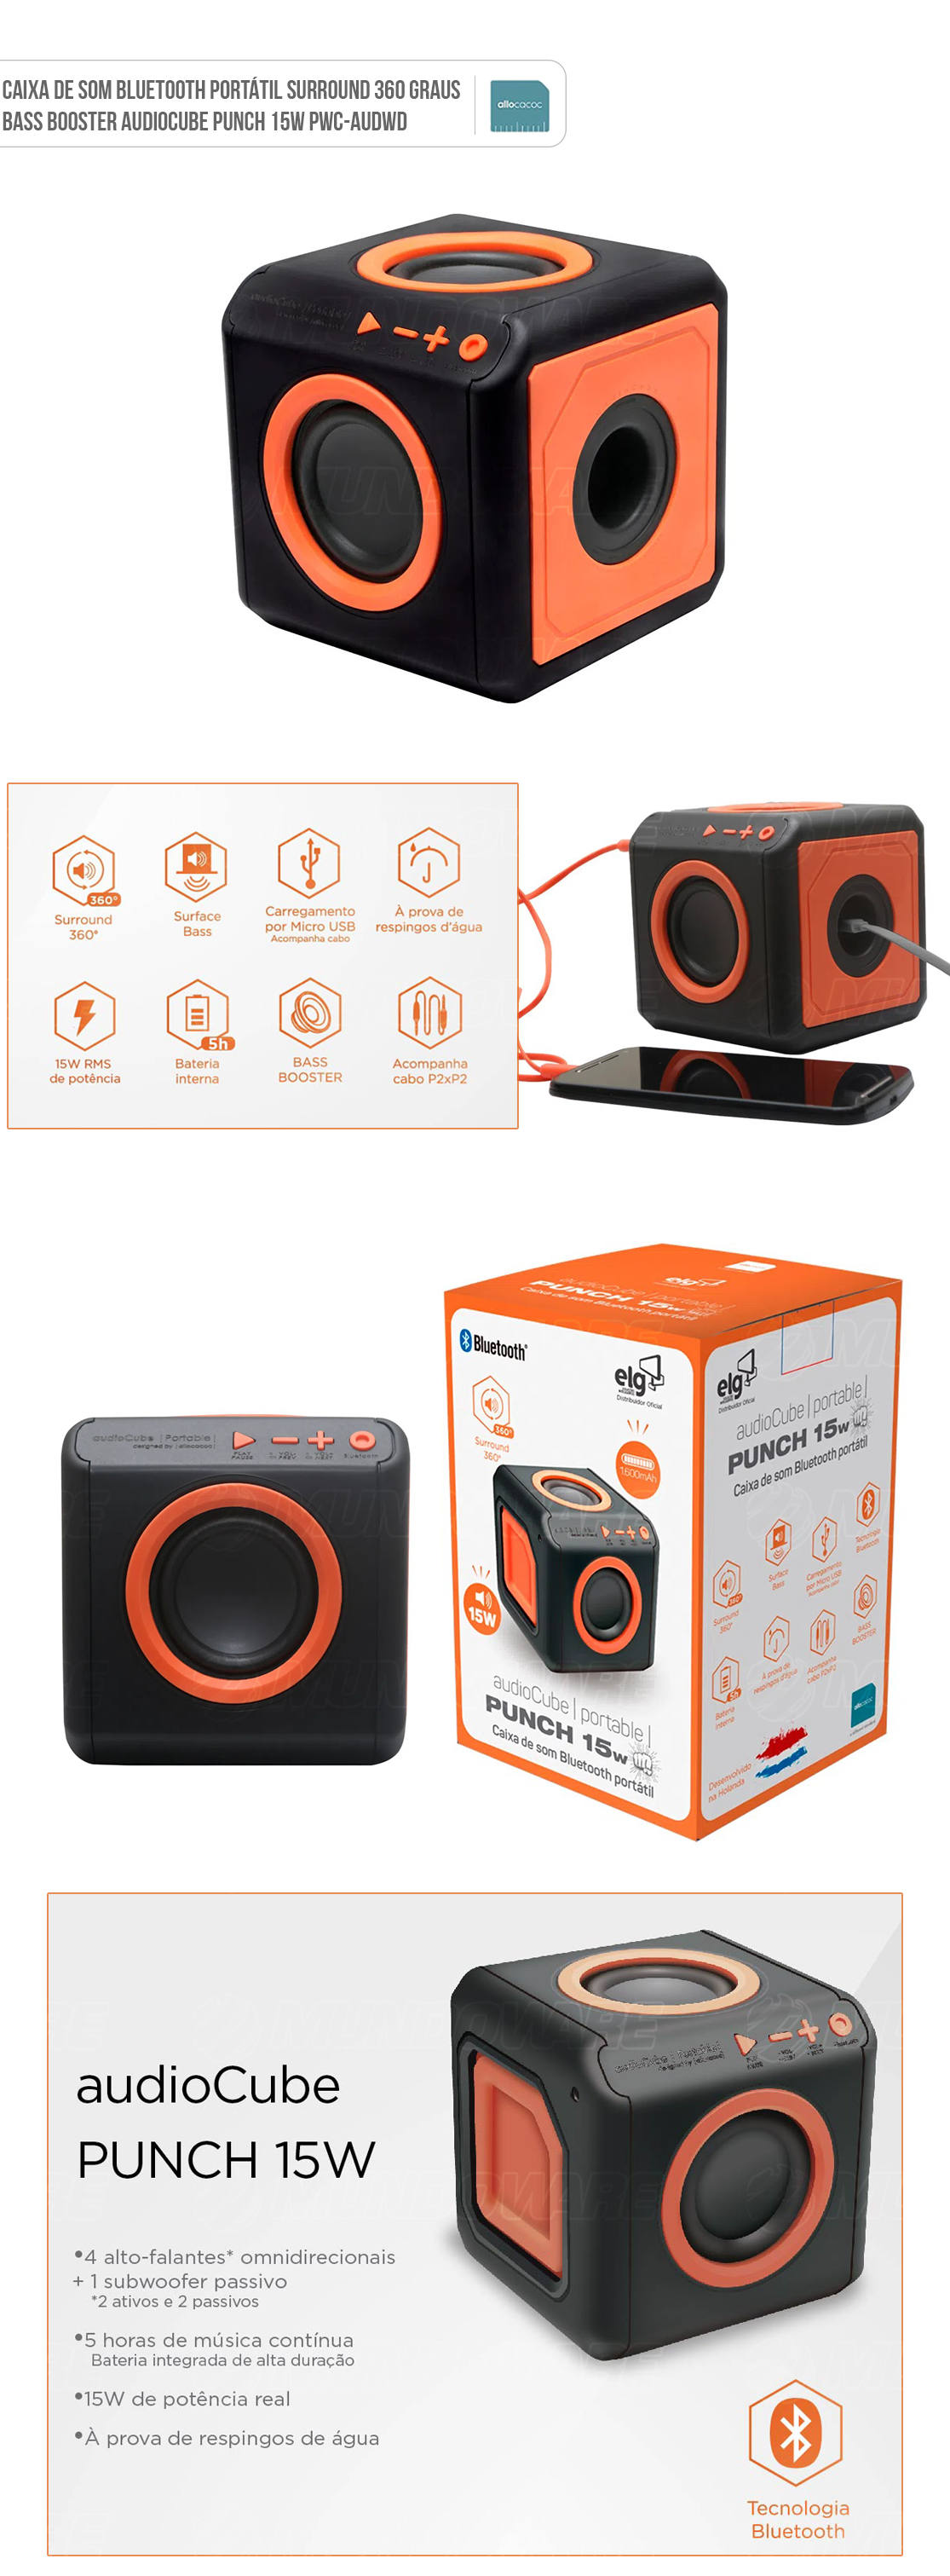 Caixa de Som Bluetooth Portátil Punch 15W Surround 360 graus Bass Booster AudioCube PWC-AUDWD